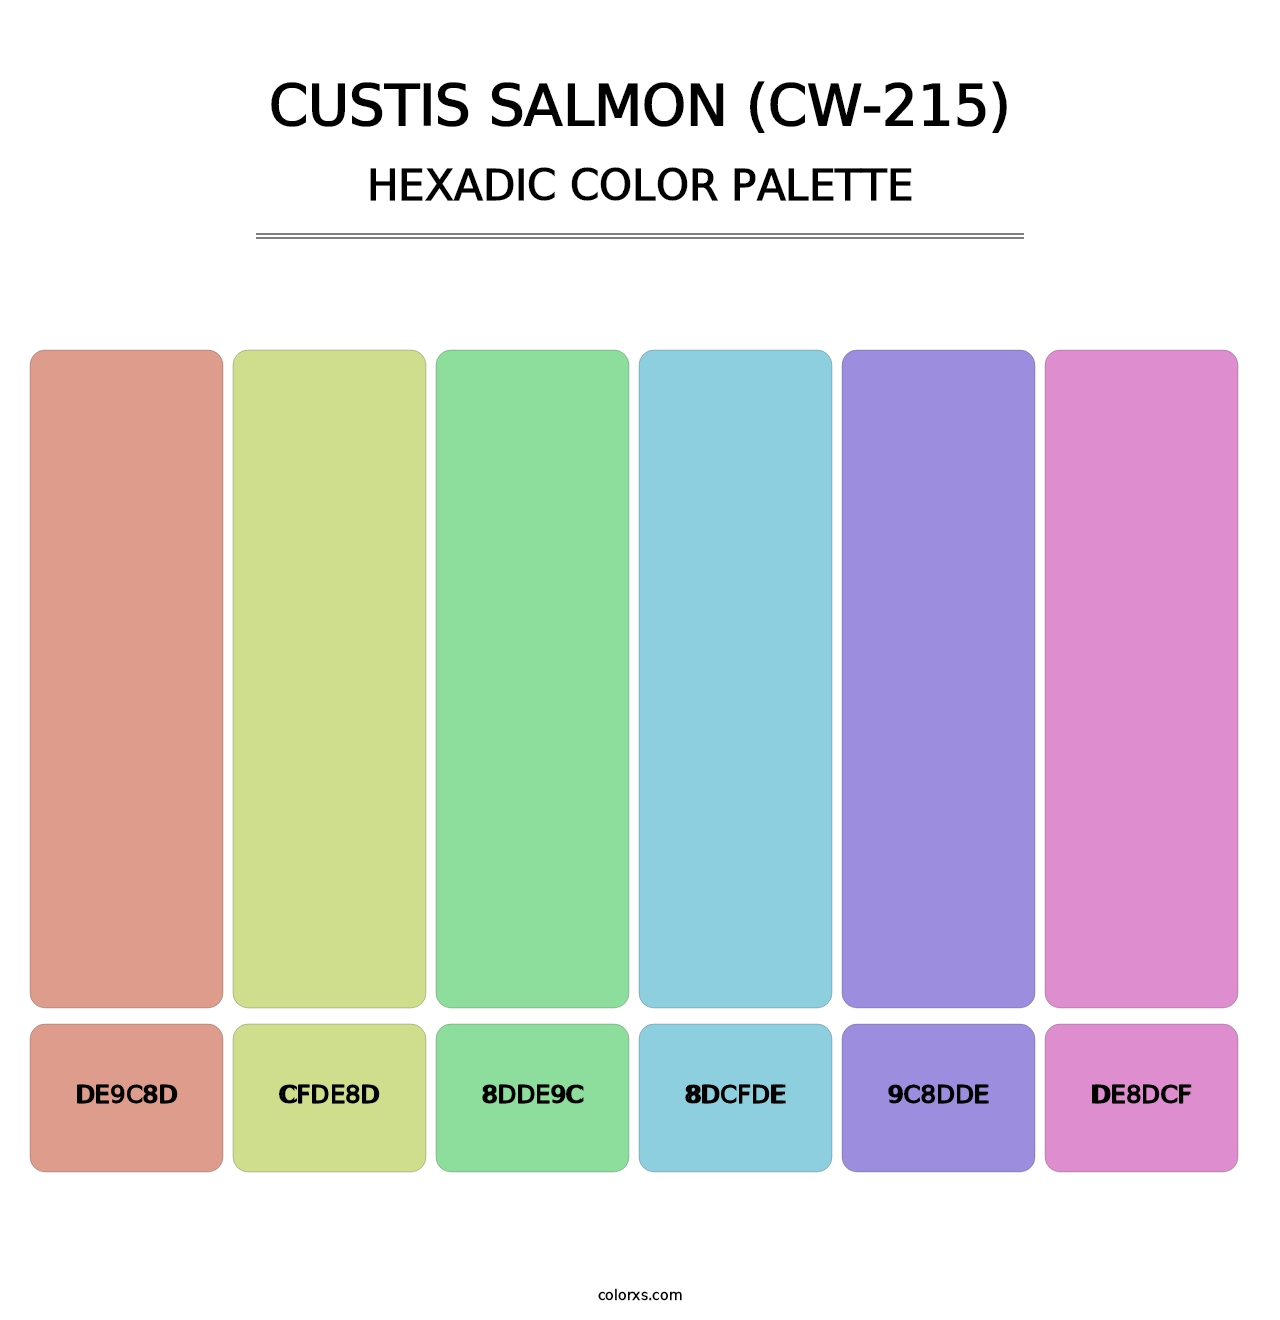 Custis Salmon (CW-215) - Hexadic Color Palette